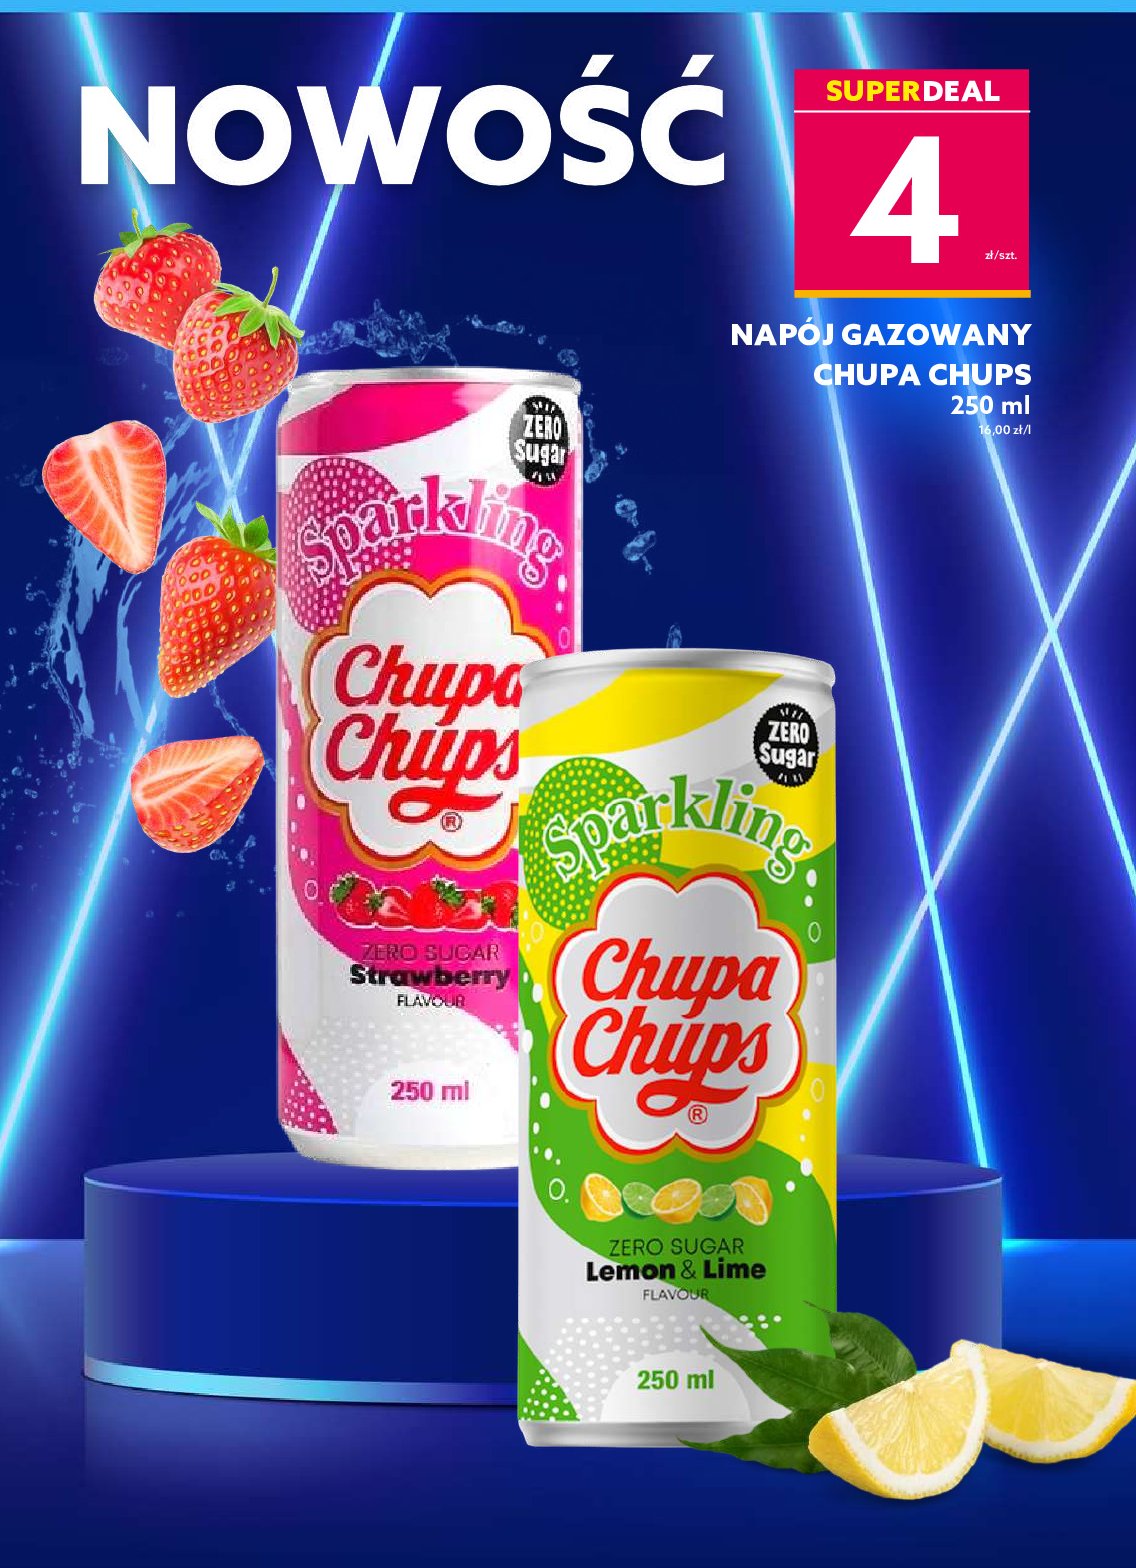 Napój strawberry zero Chupa chups sparkling promocja